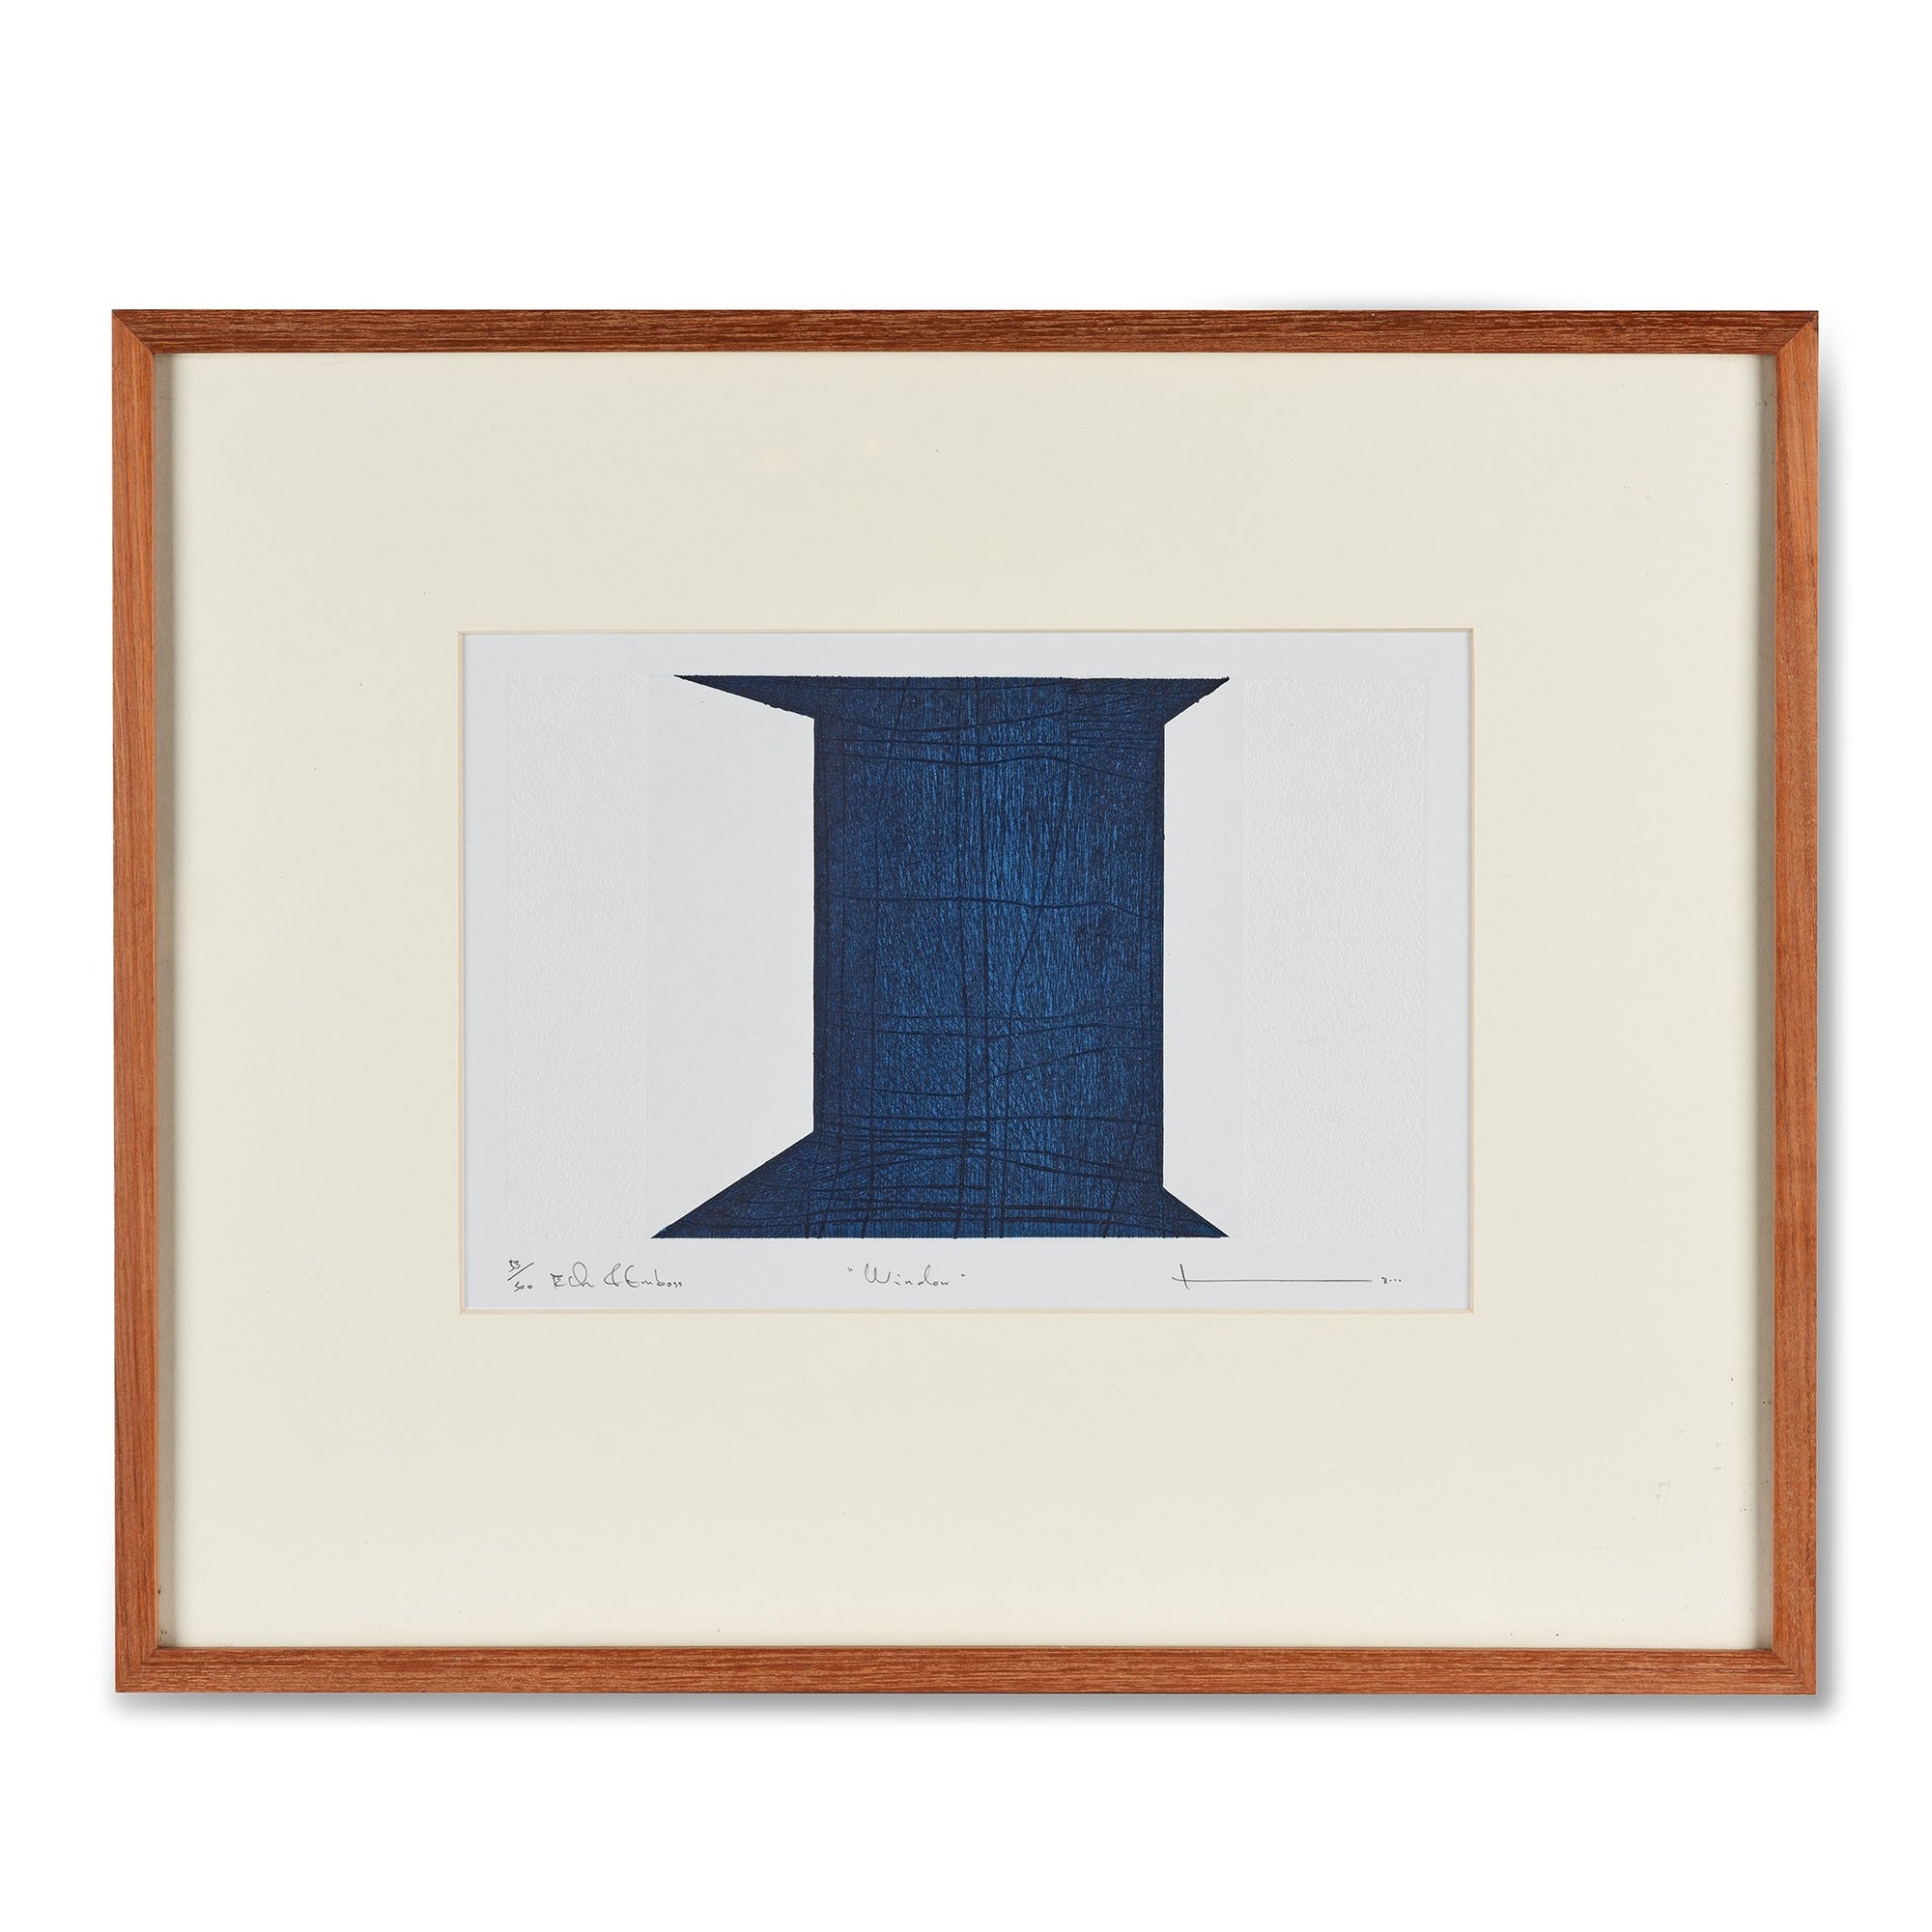 SALE -Framed Indigo Textile Lithograph - 45.5 x 56 cm - AUK182